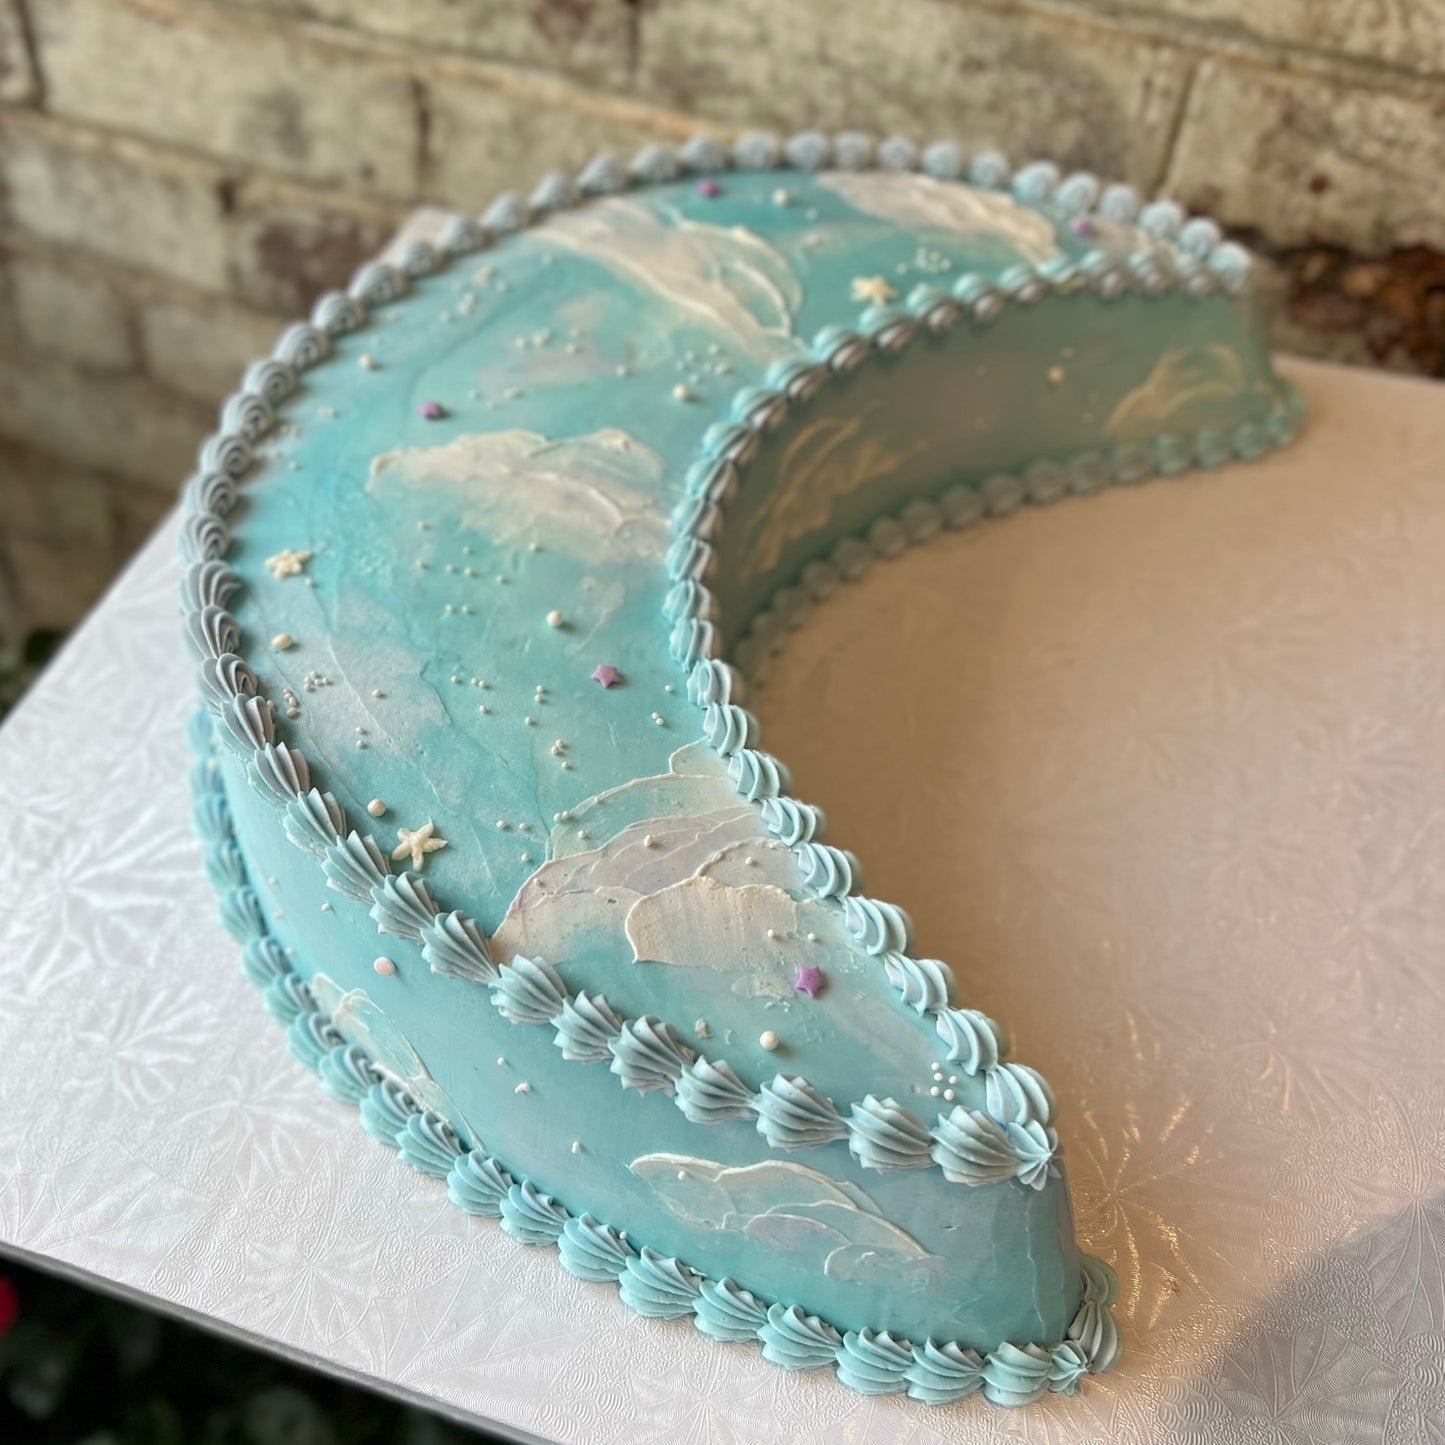 Light blue crescent moon shaped cake